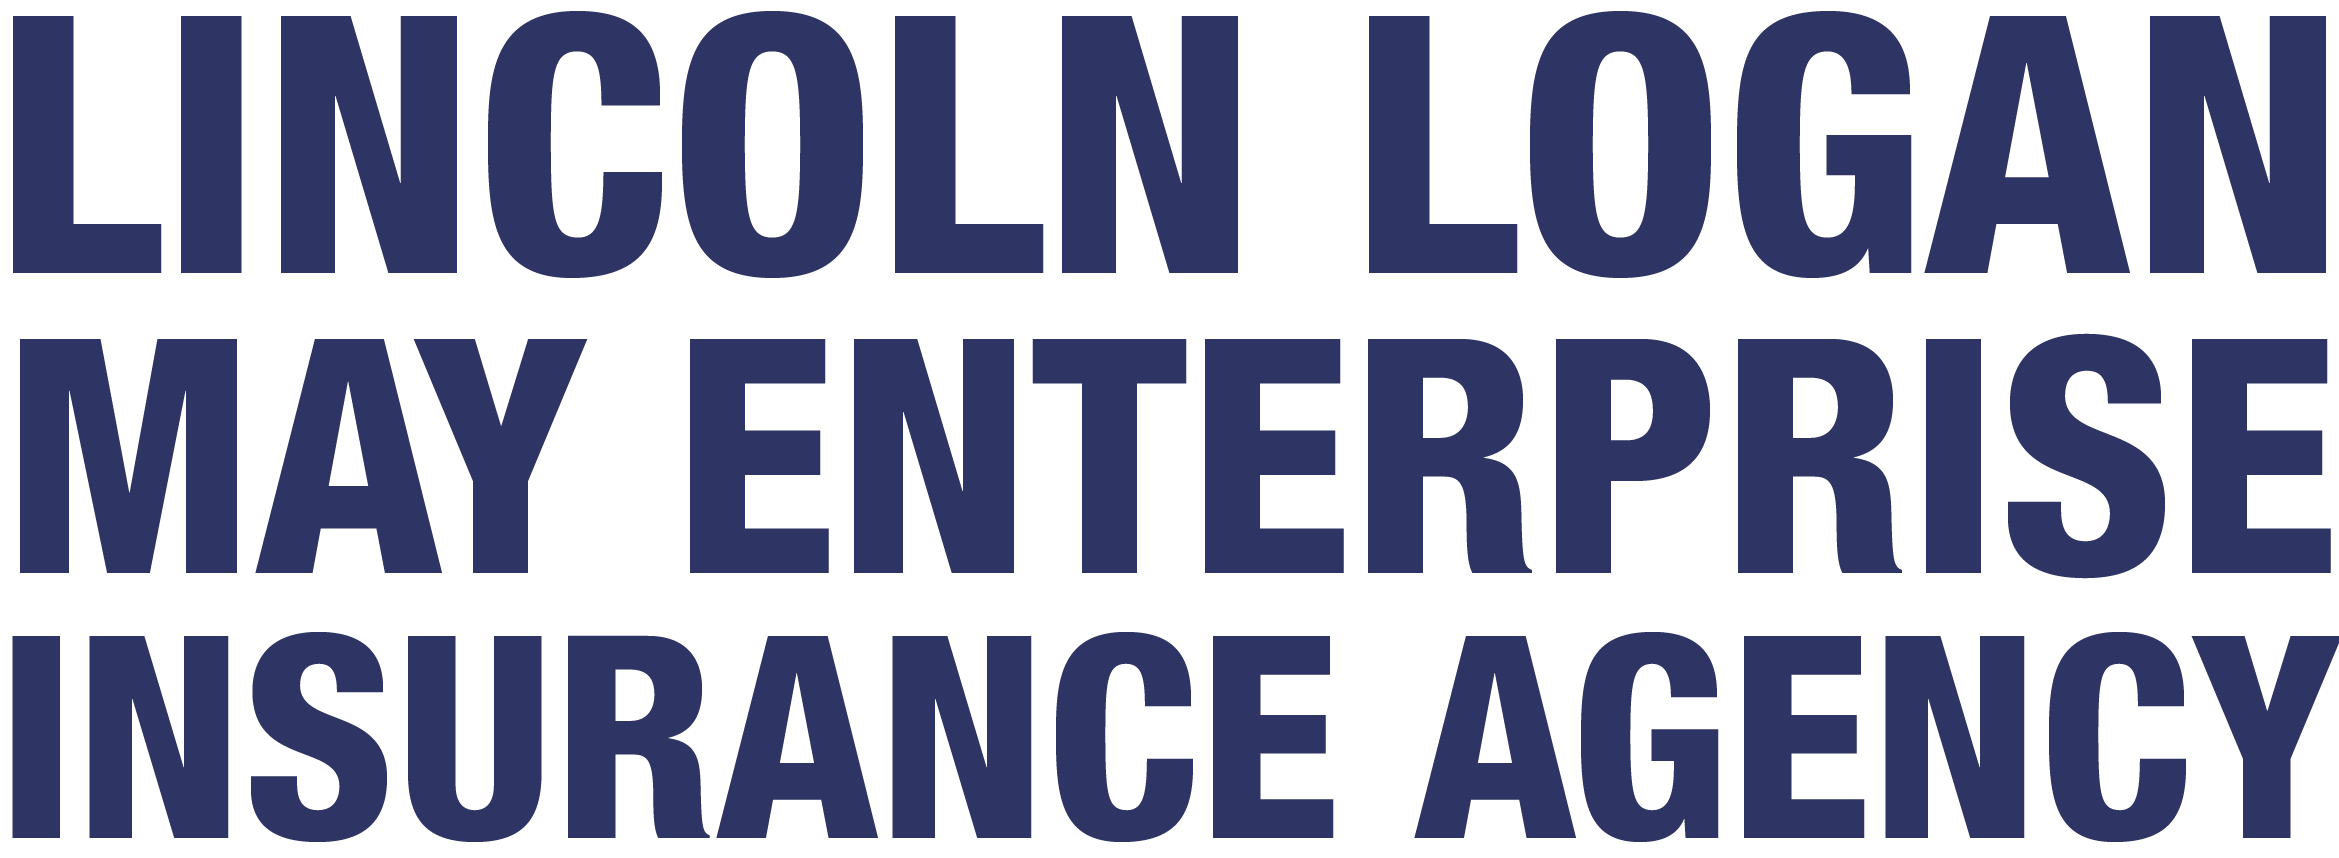 lincoln logan may enterprise insurance agency lincoln illinois